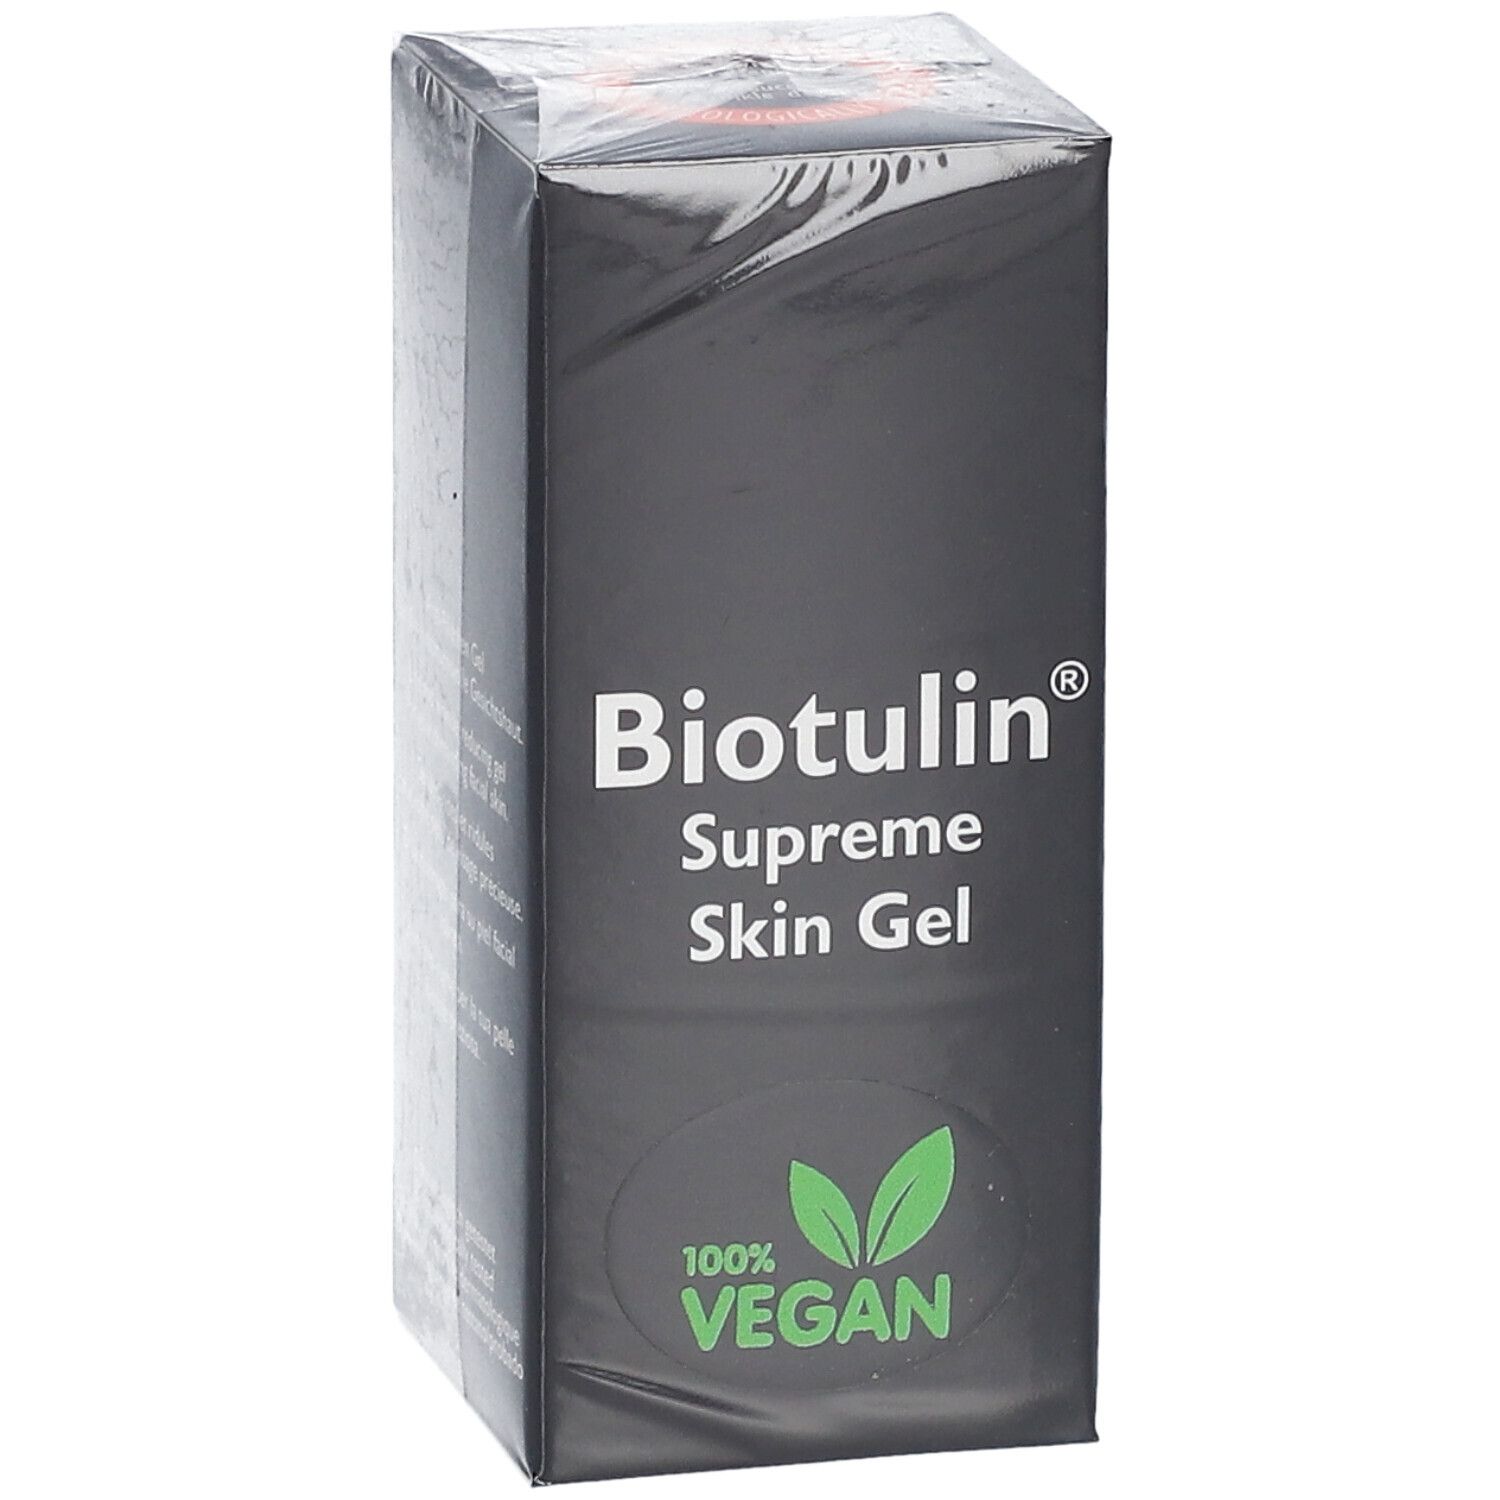 Biotulin® Supreme Skin Gel